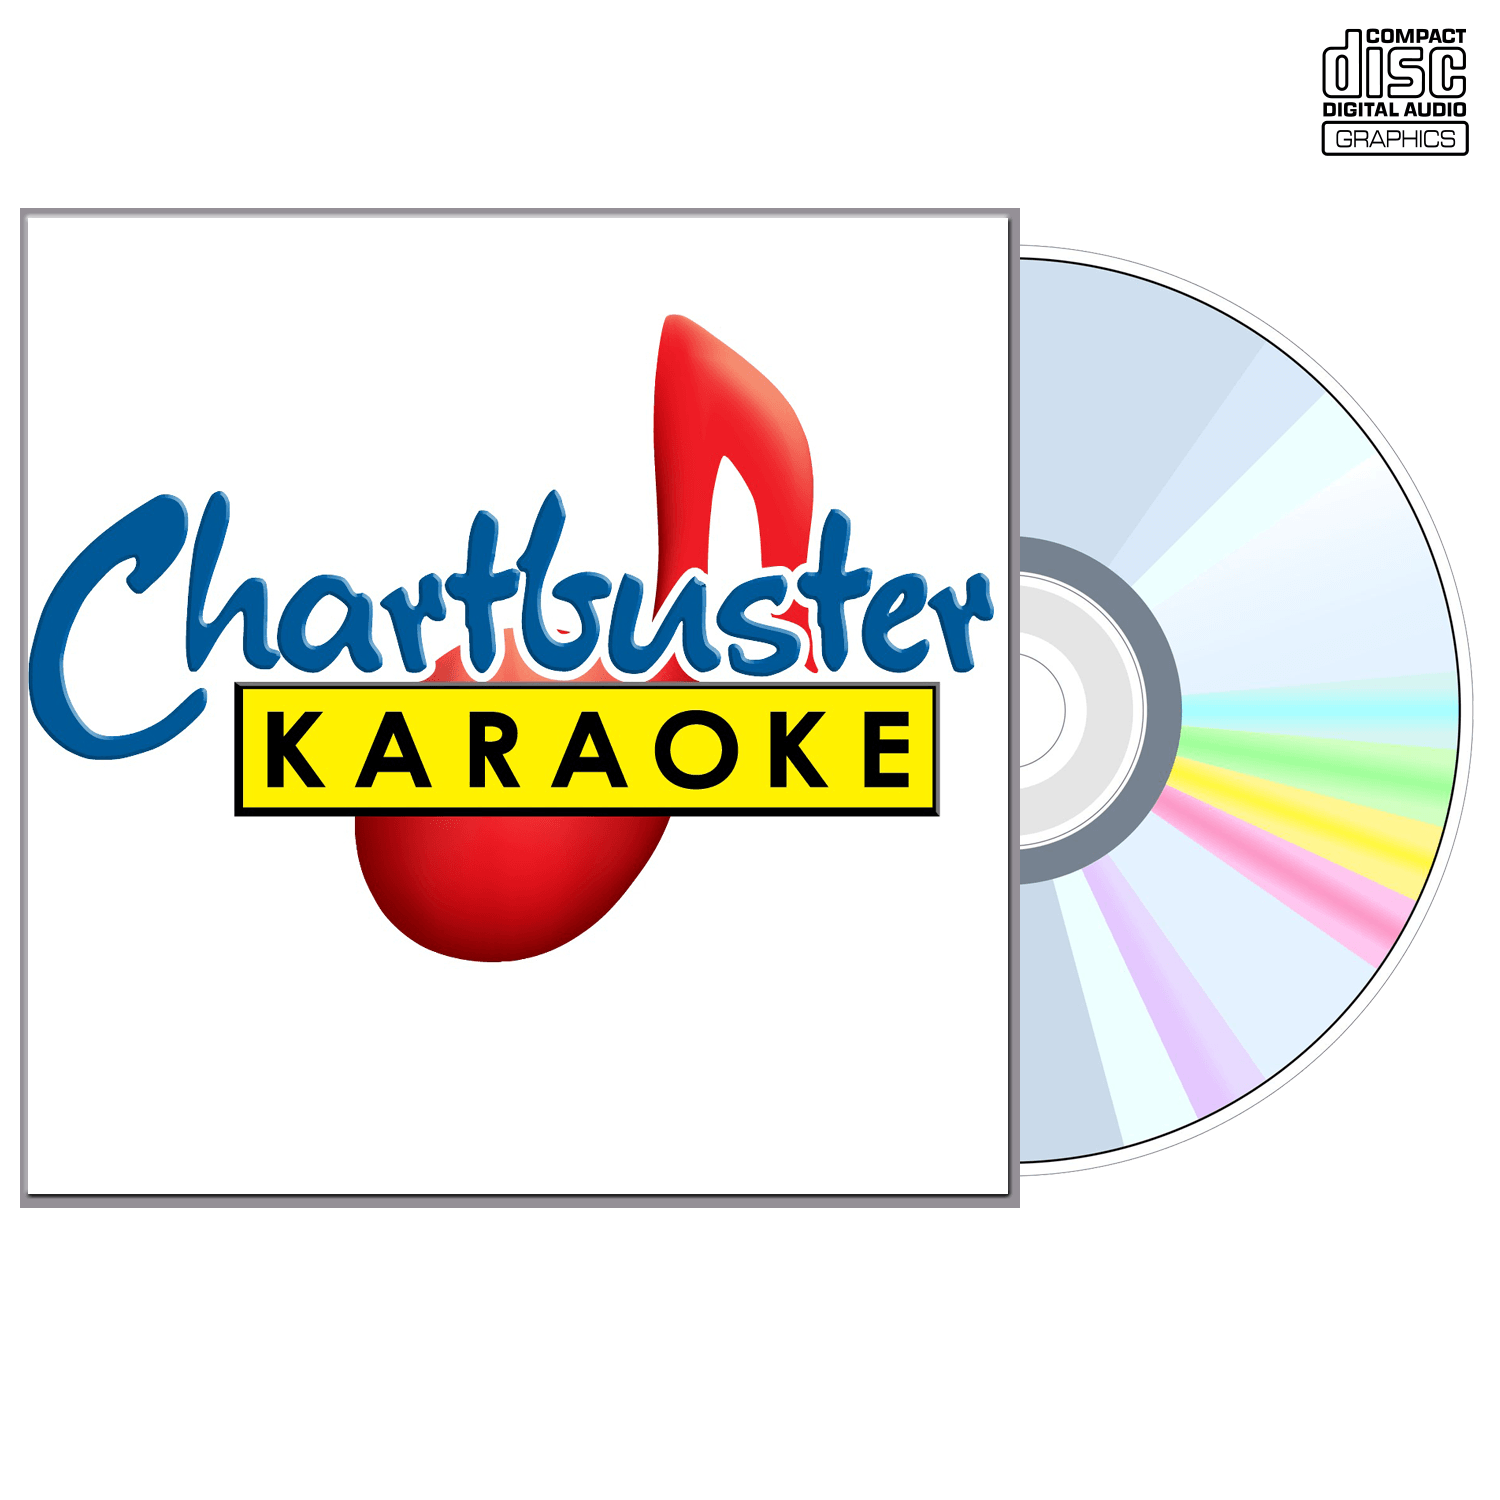 Simple Plan - CD+G - Chartbuster Karaoke - Karaoke Home Entertainment